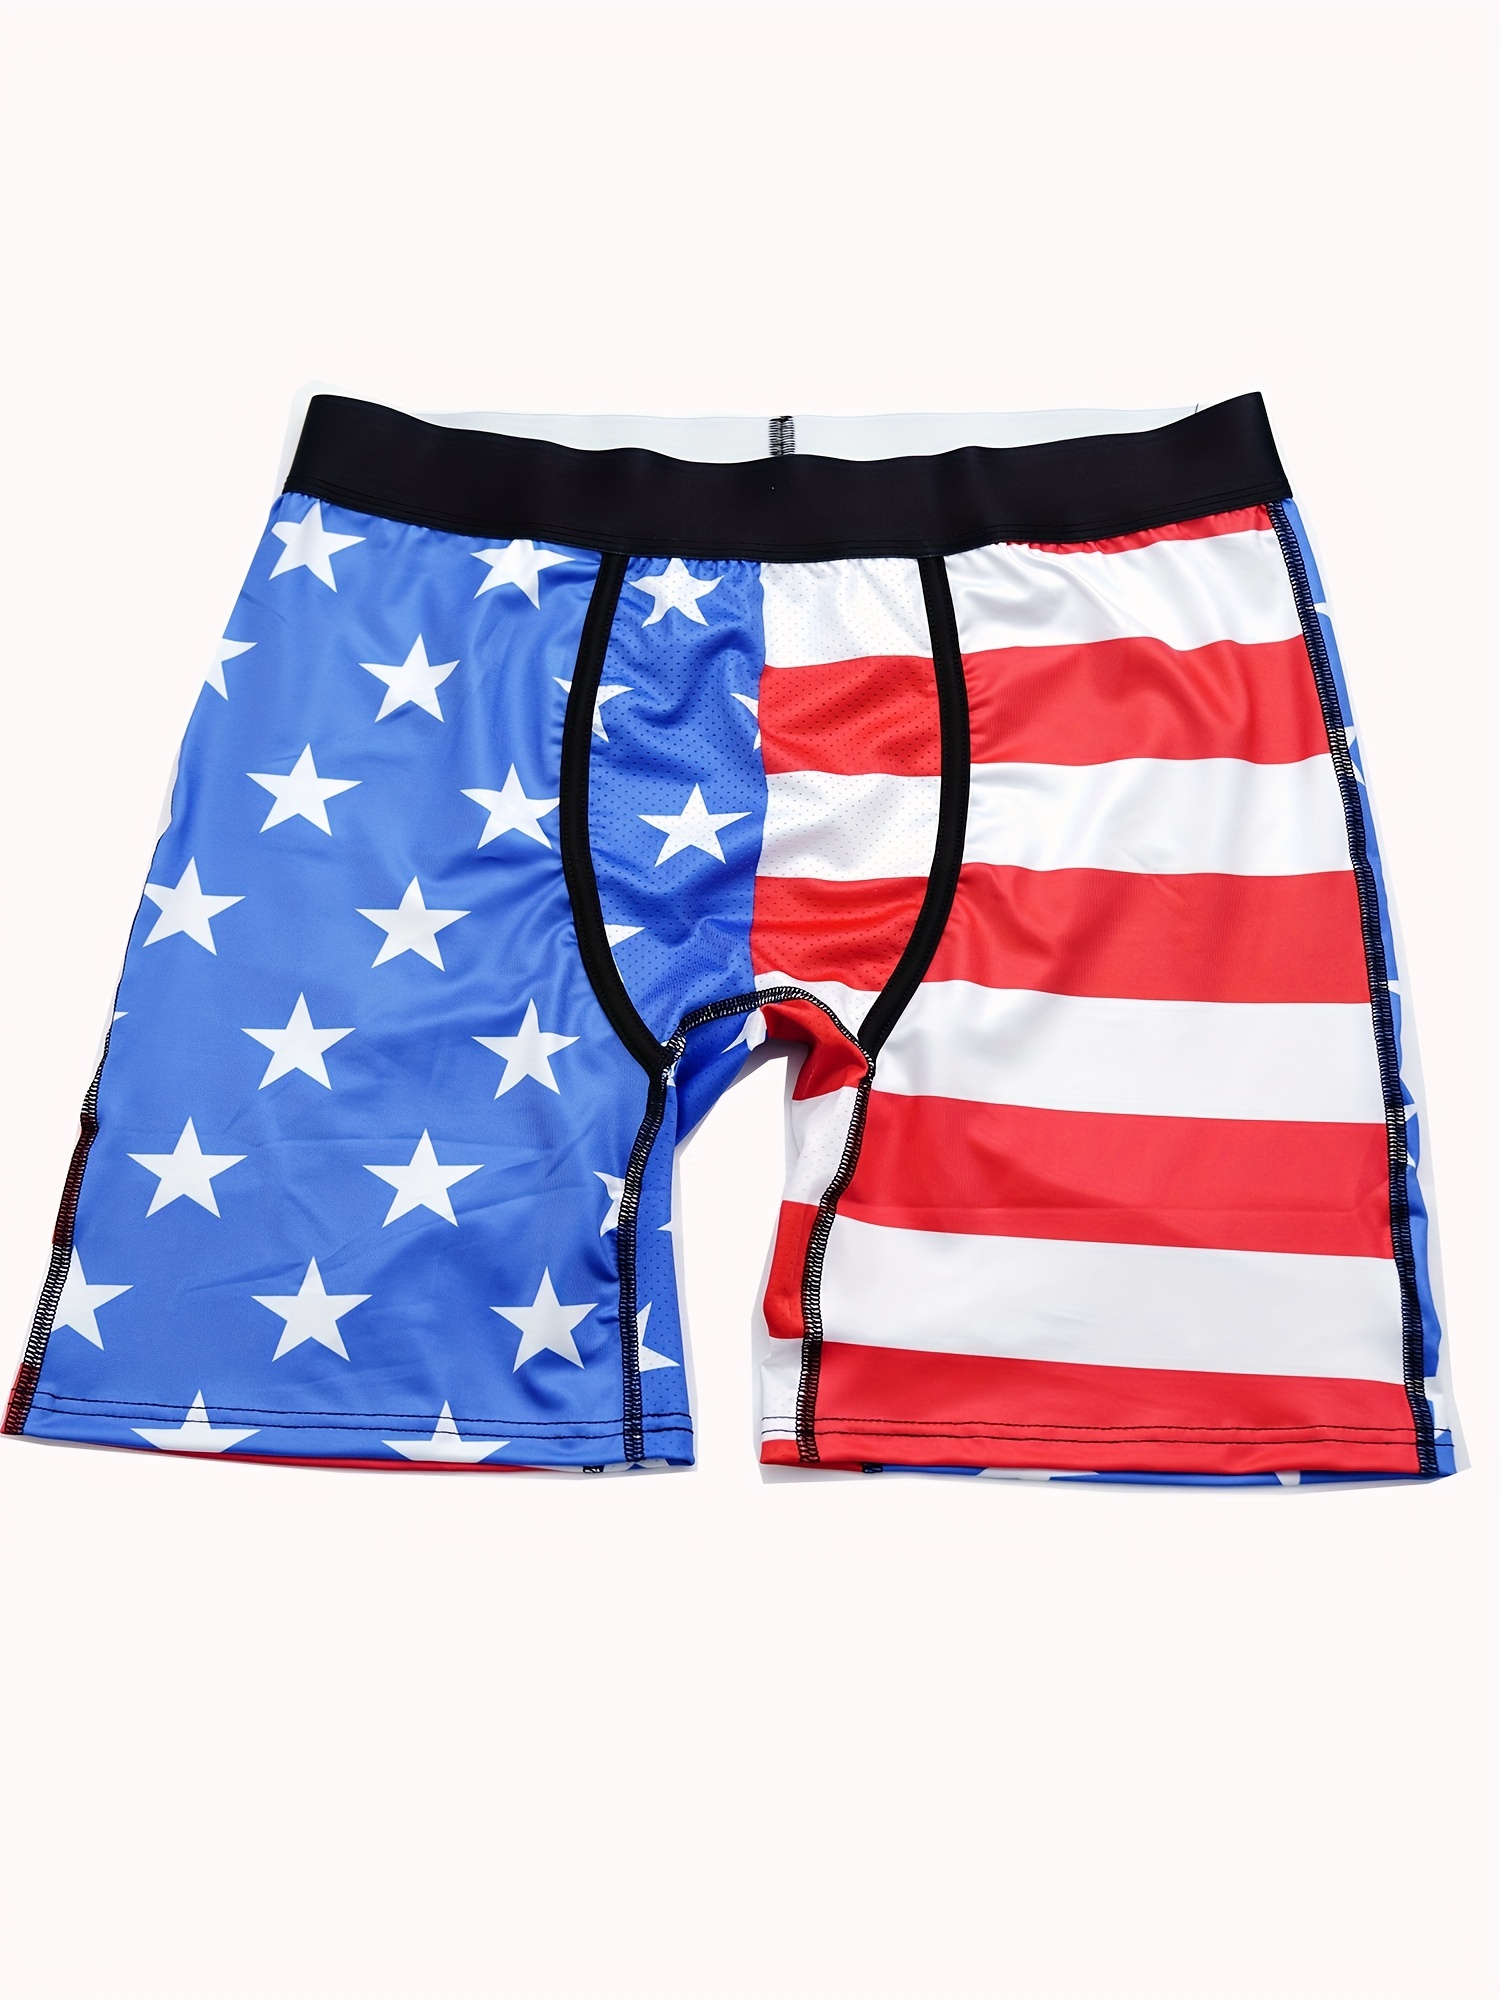 Novelty American Flag Boxer Shorts Boxers